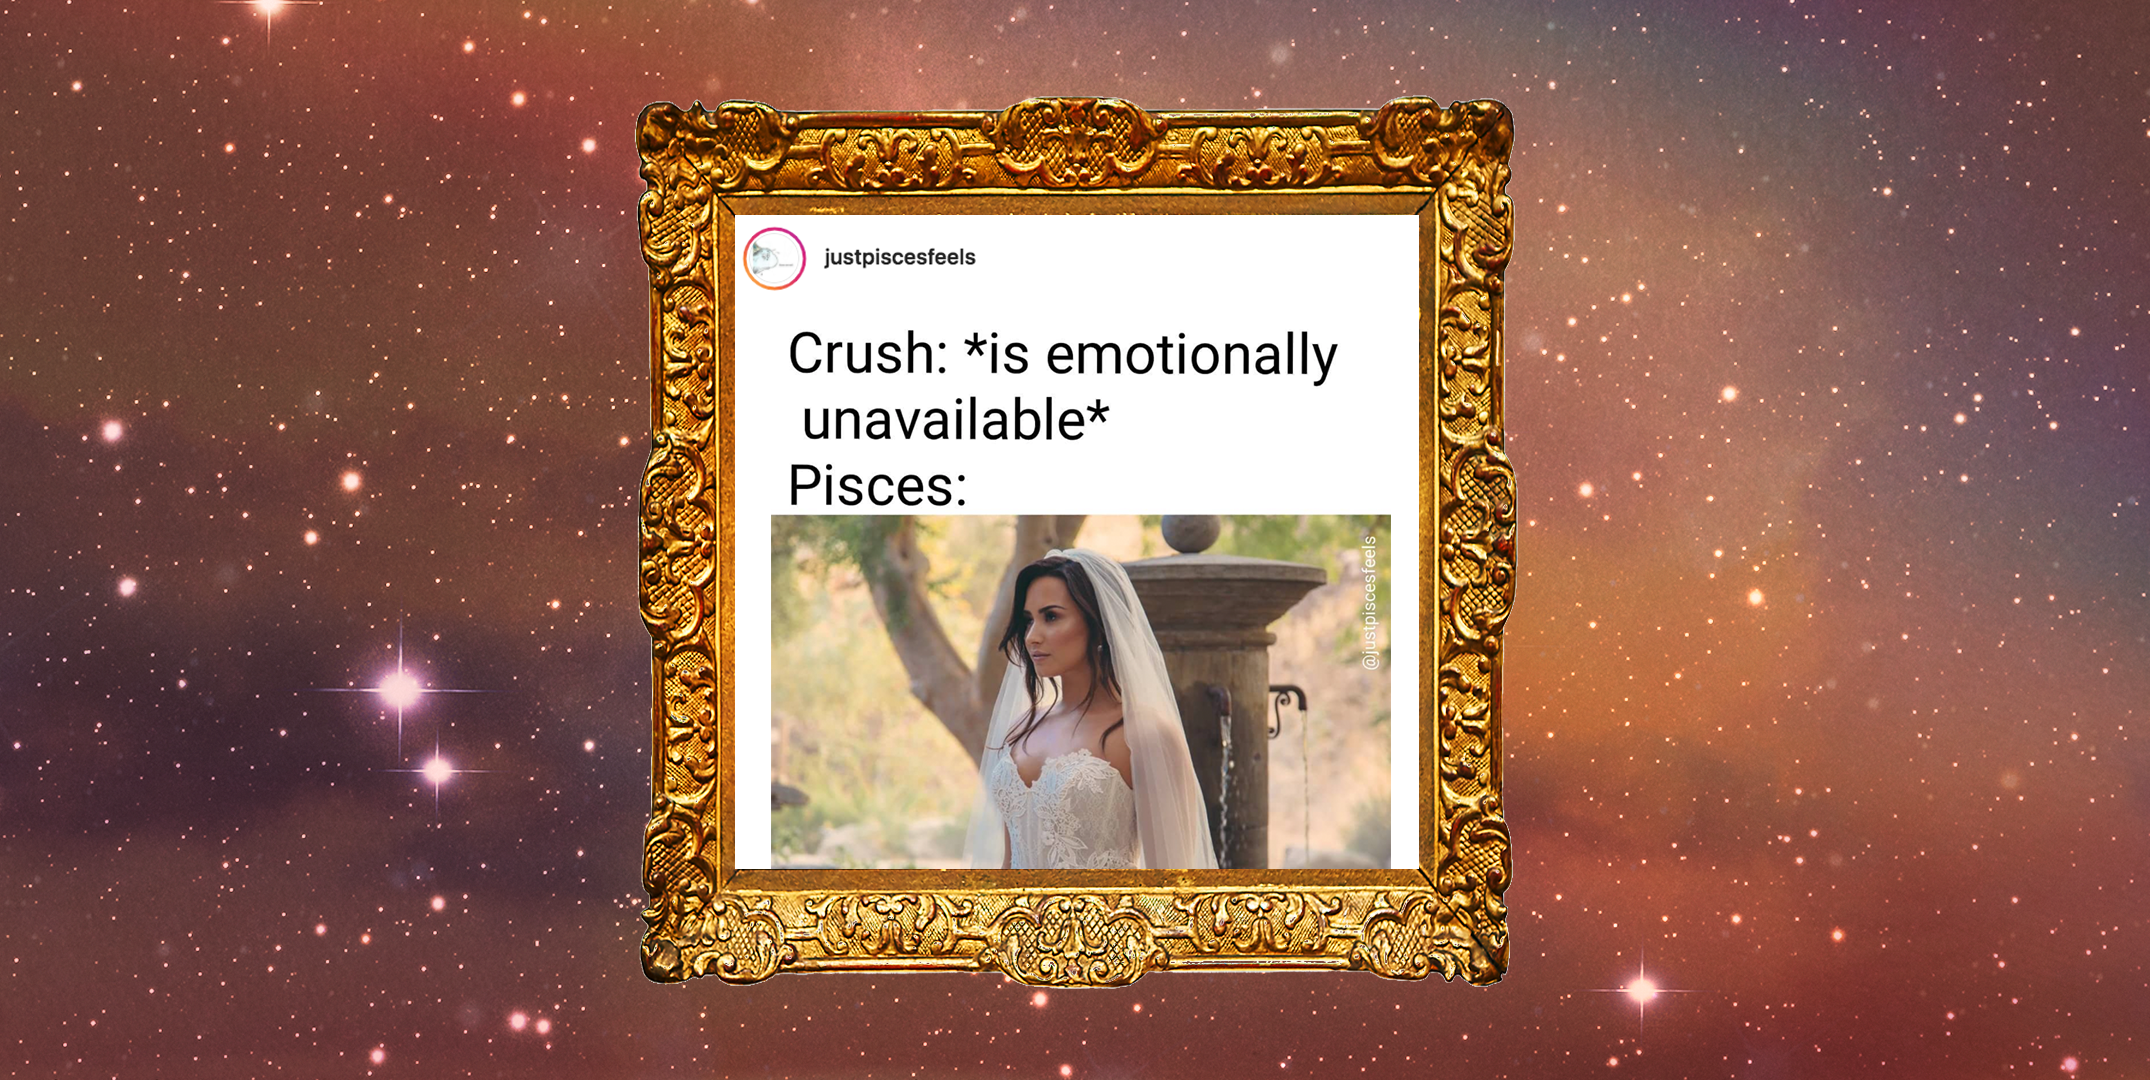 Best Pisces Memes - Funny Astrology Memes on Instagram